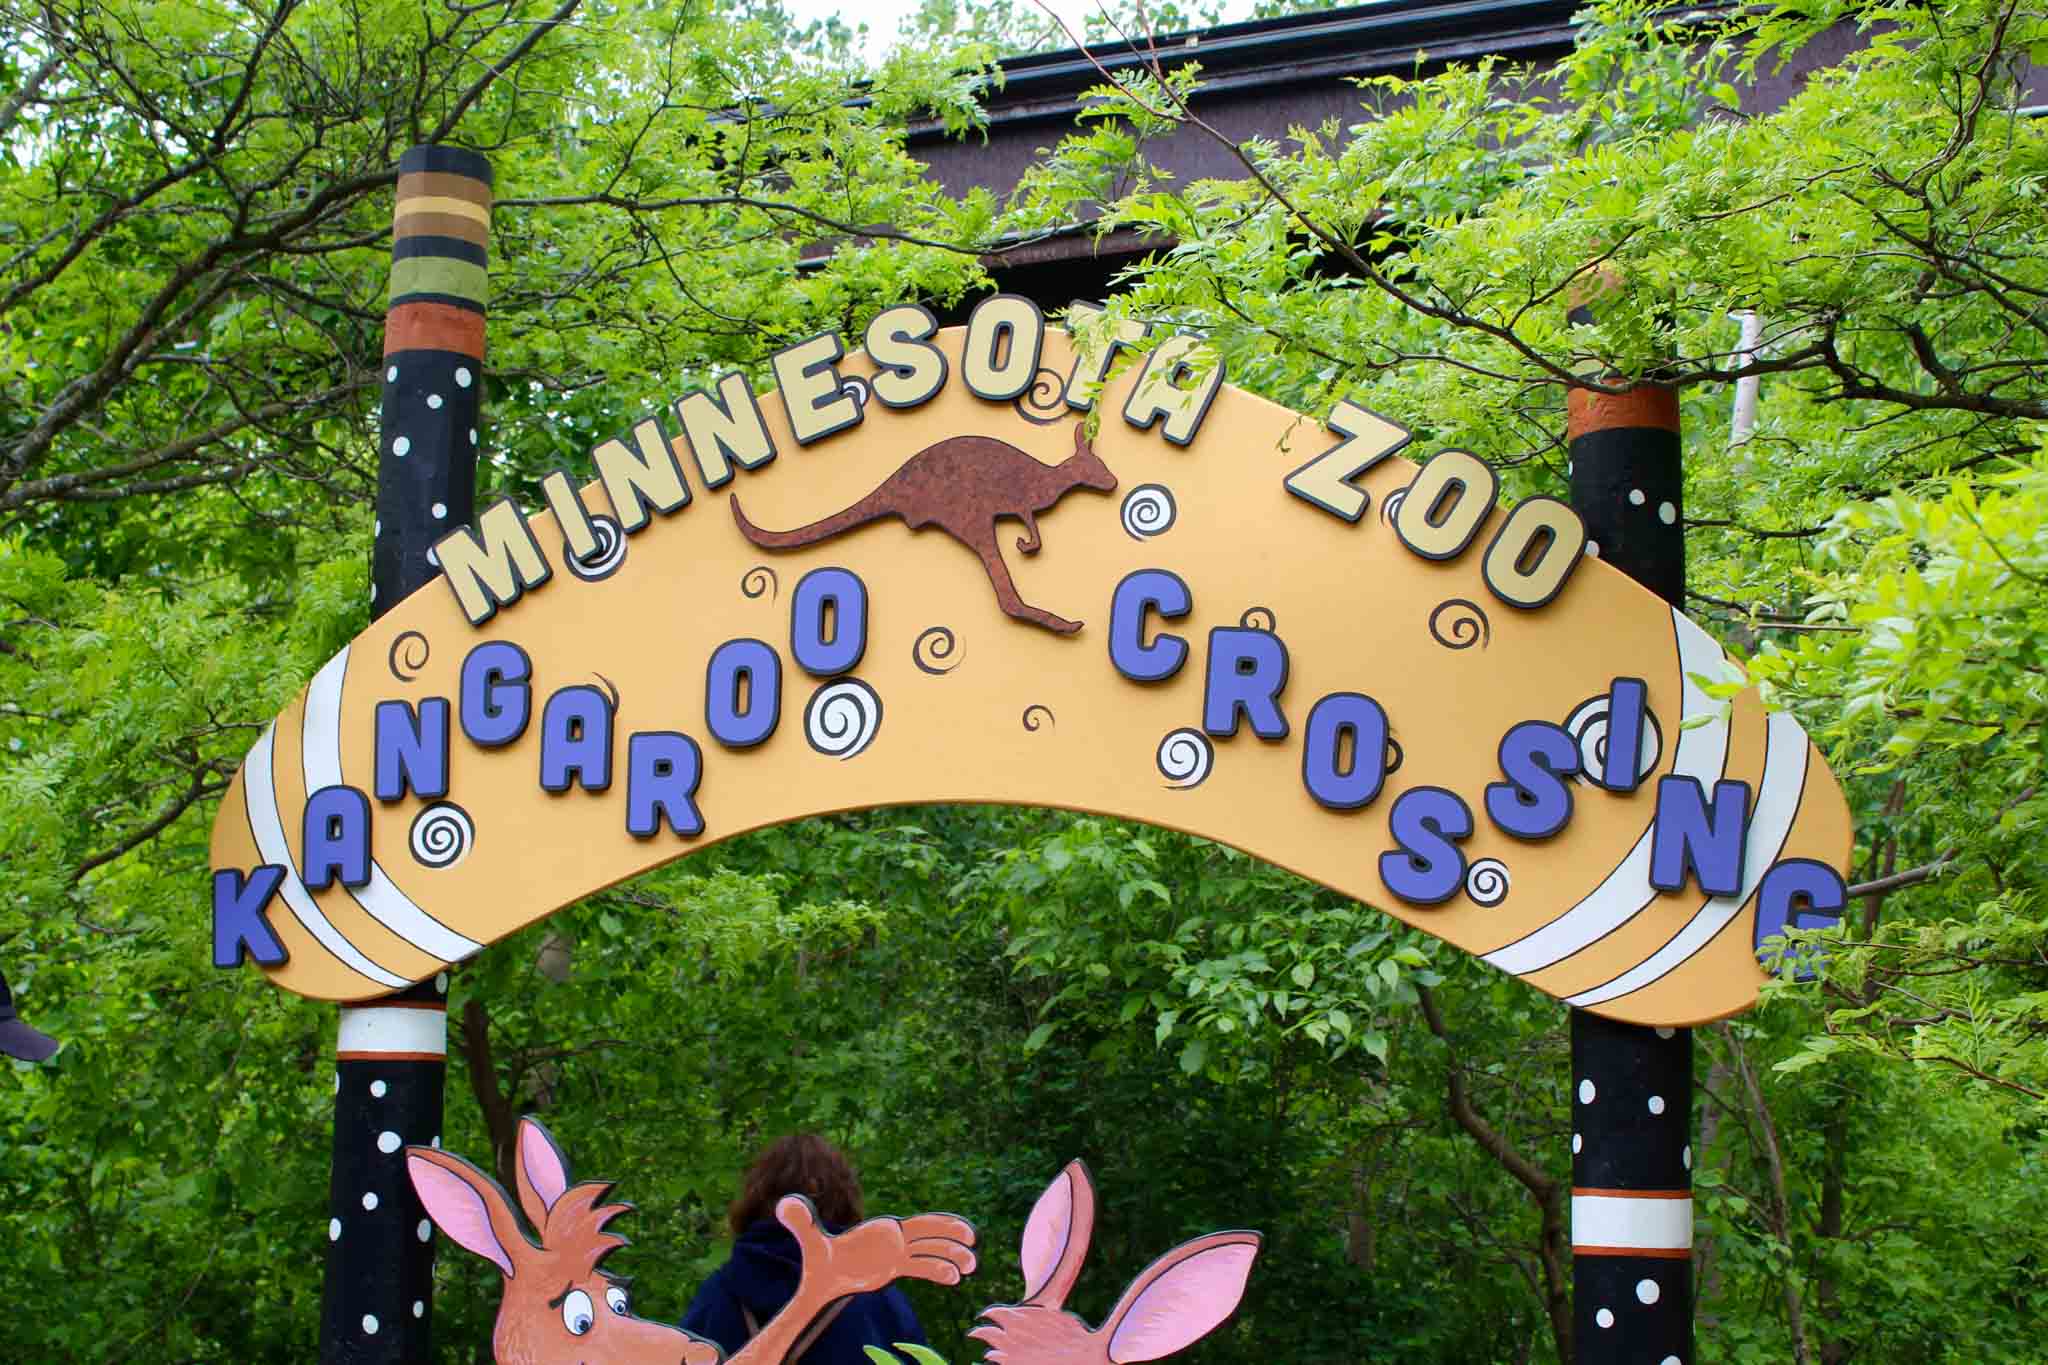 Kangaroo Crossing at the Minnesota Zoo